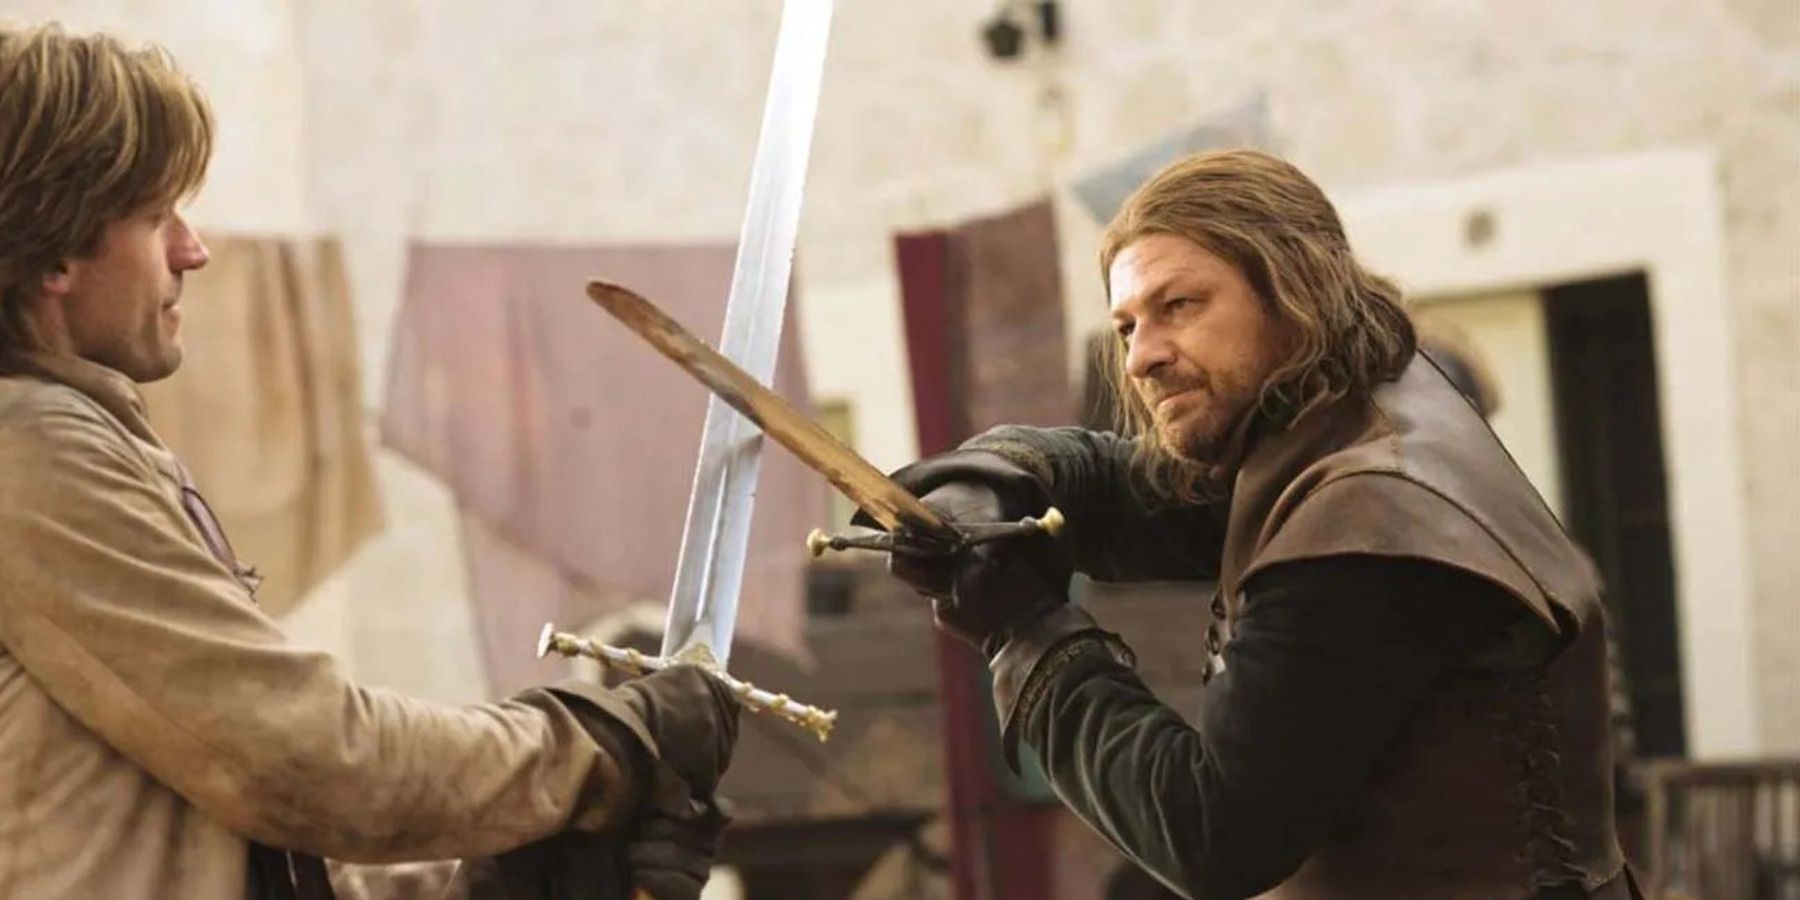 Ned Stark and Jaime Lannister clash blades in King's Landing